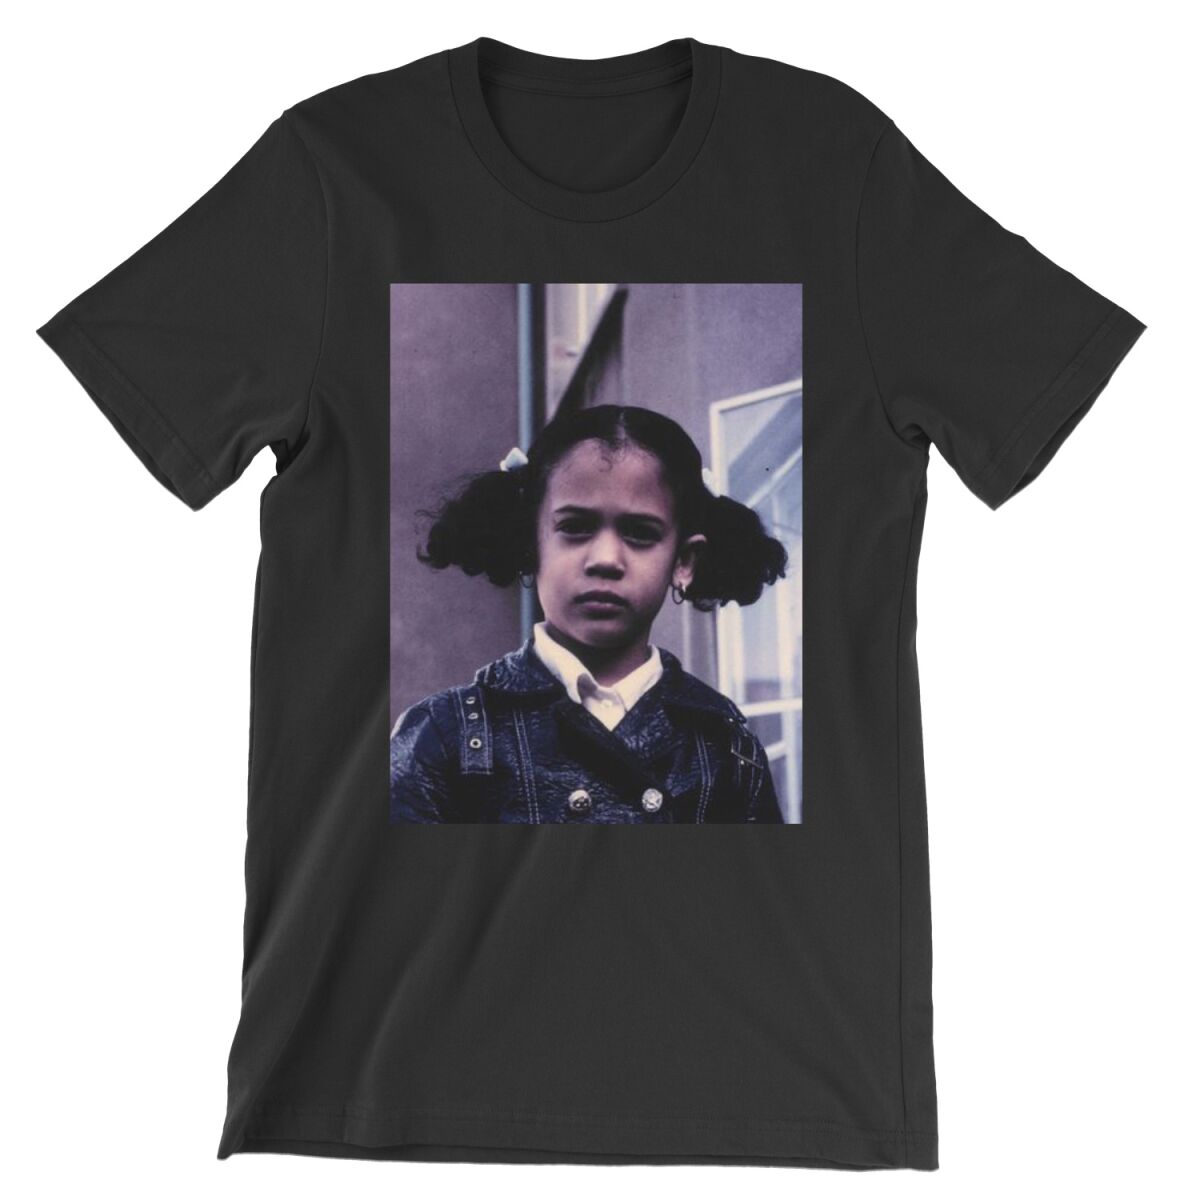 Kamala Harris' "That Little Girl Was Me" T-shirt